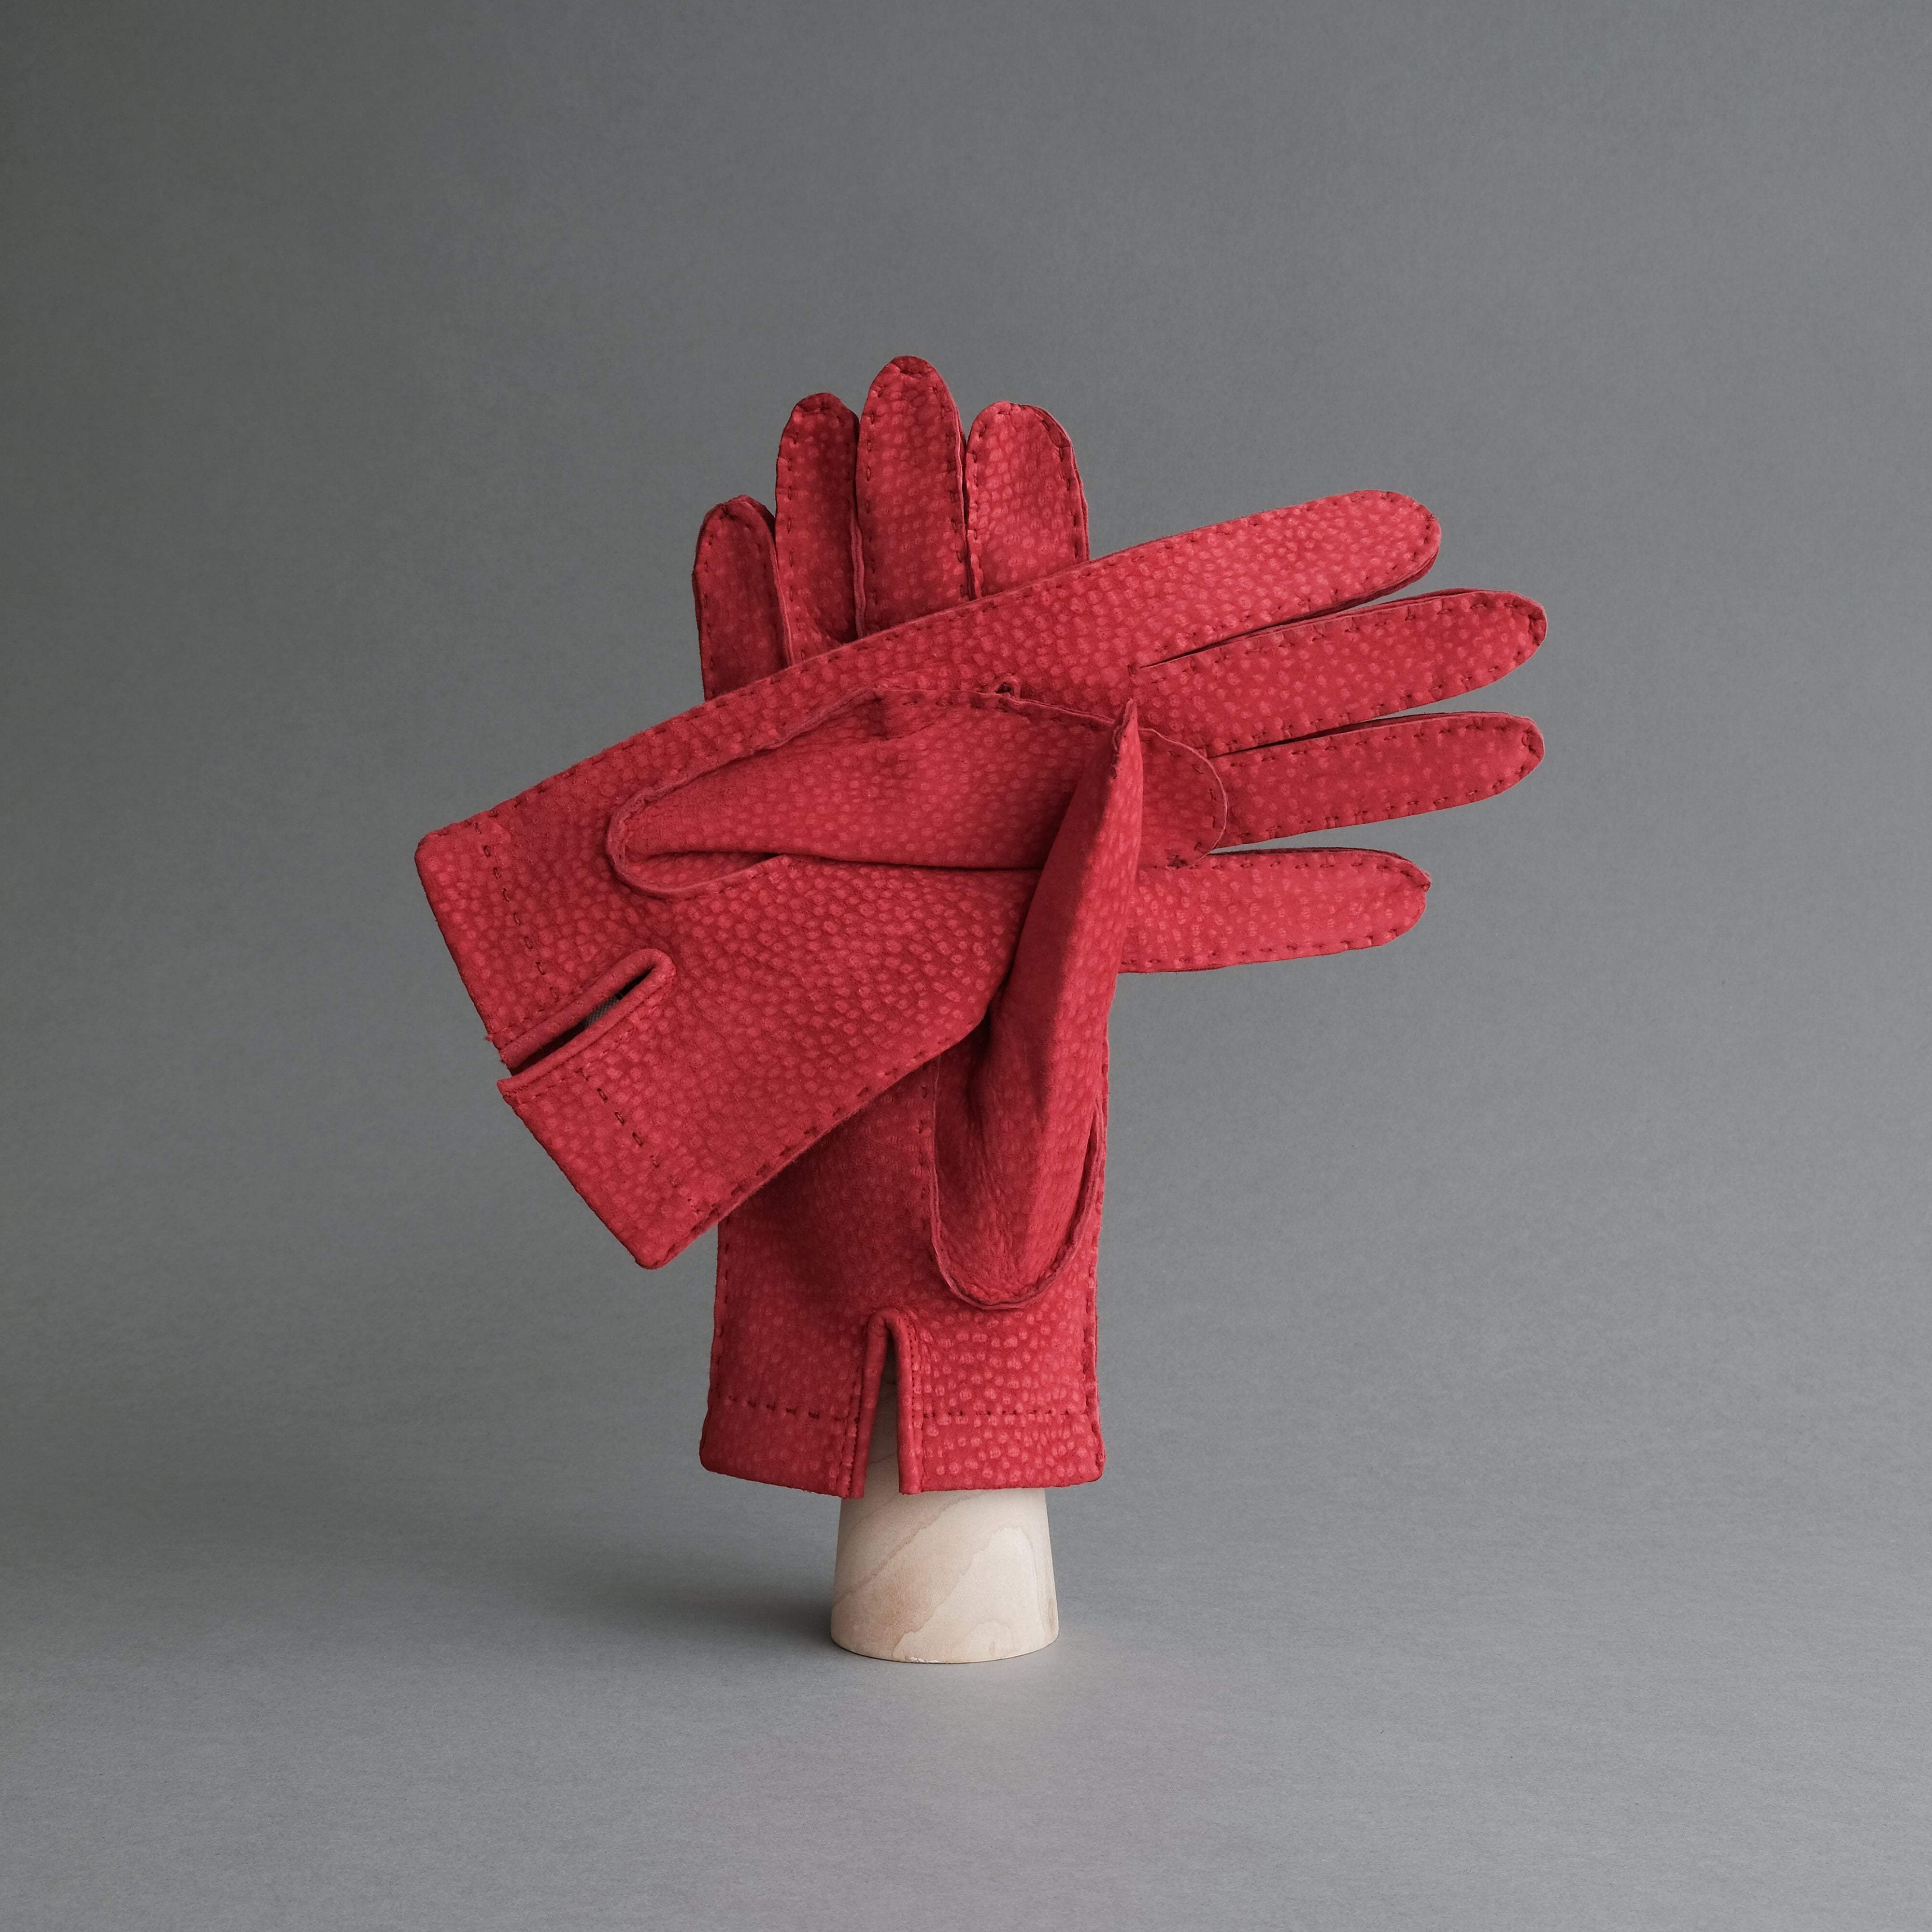 Ladies Dress Gloves from Red Carpincho Leather - TR Handschuhe Wien - Thomas Riemer Handmade Gloves